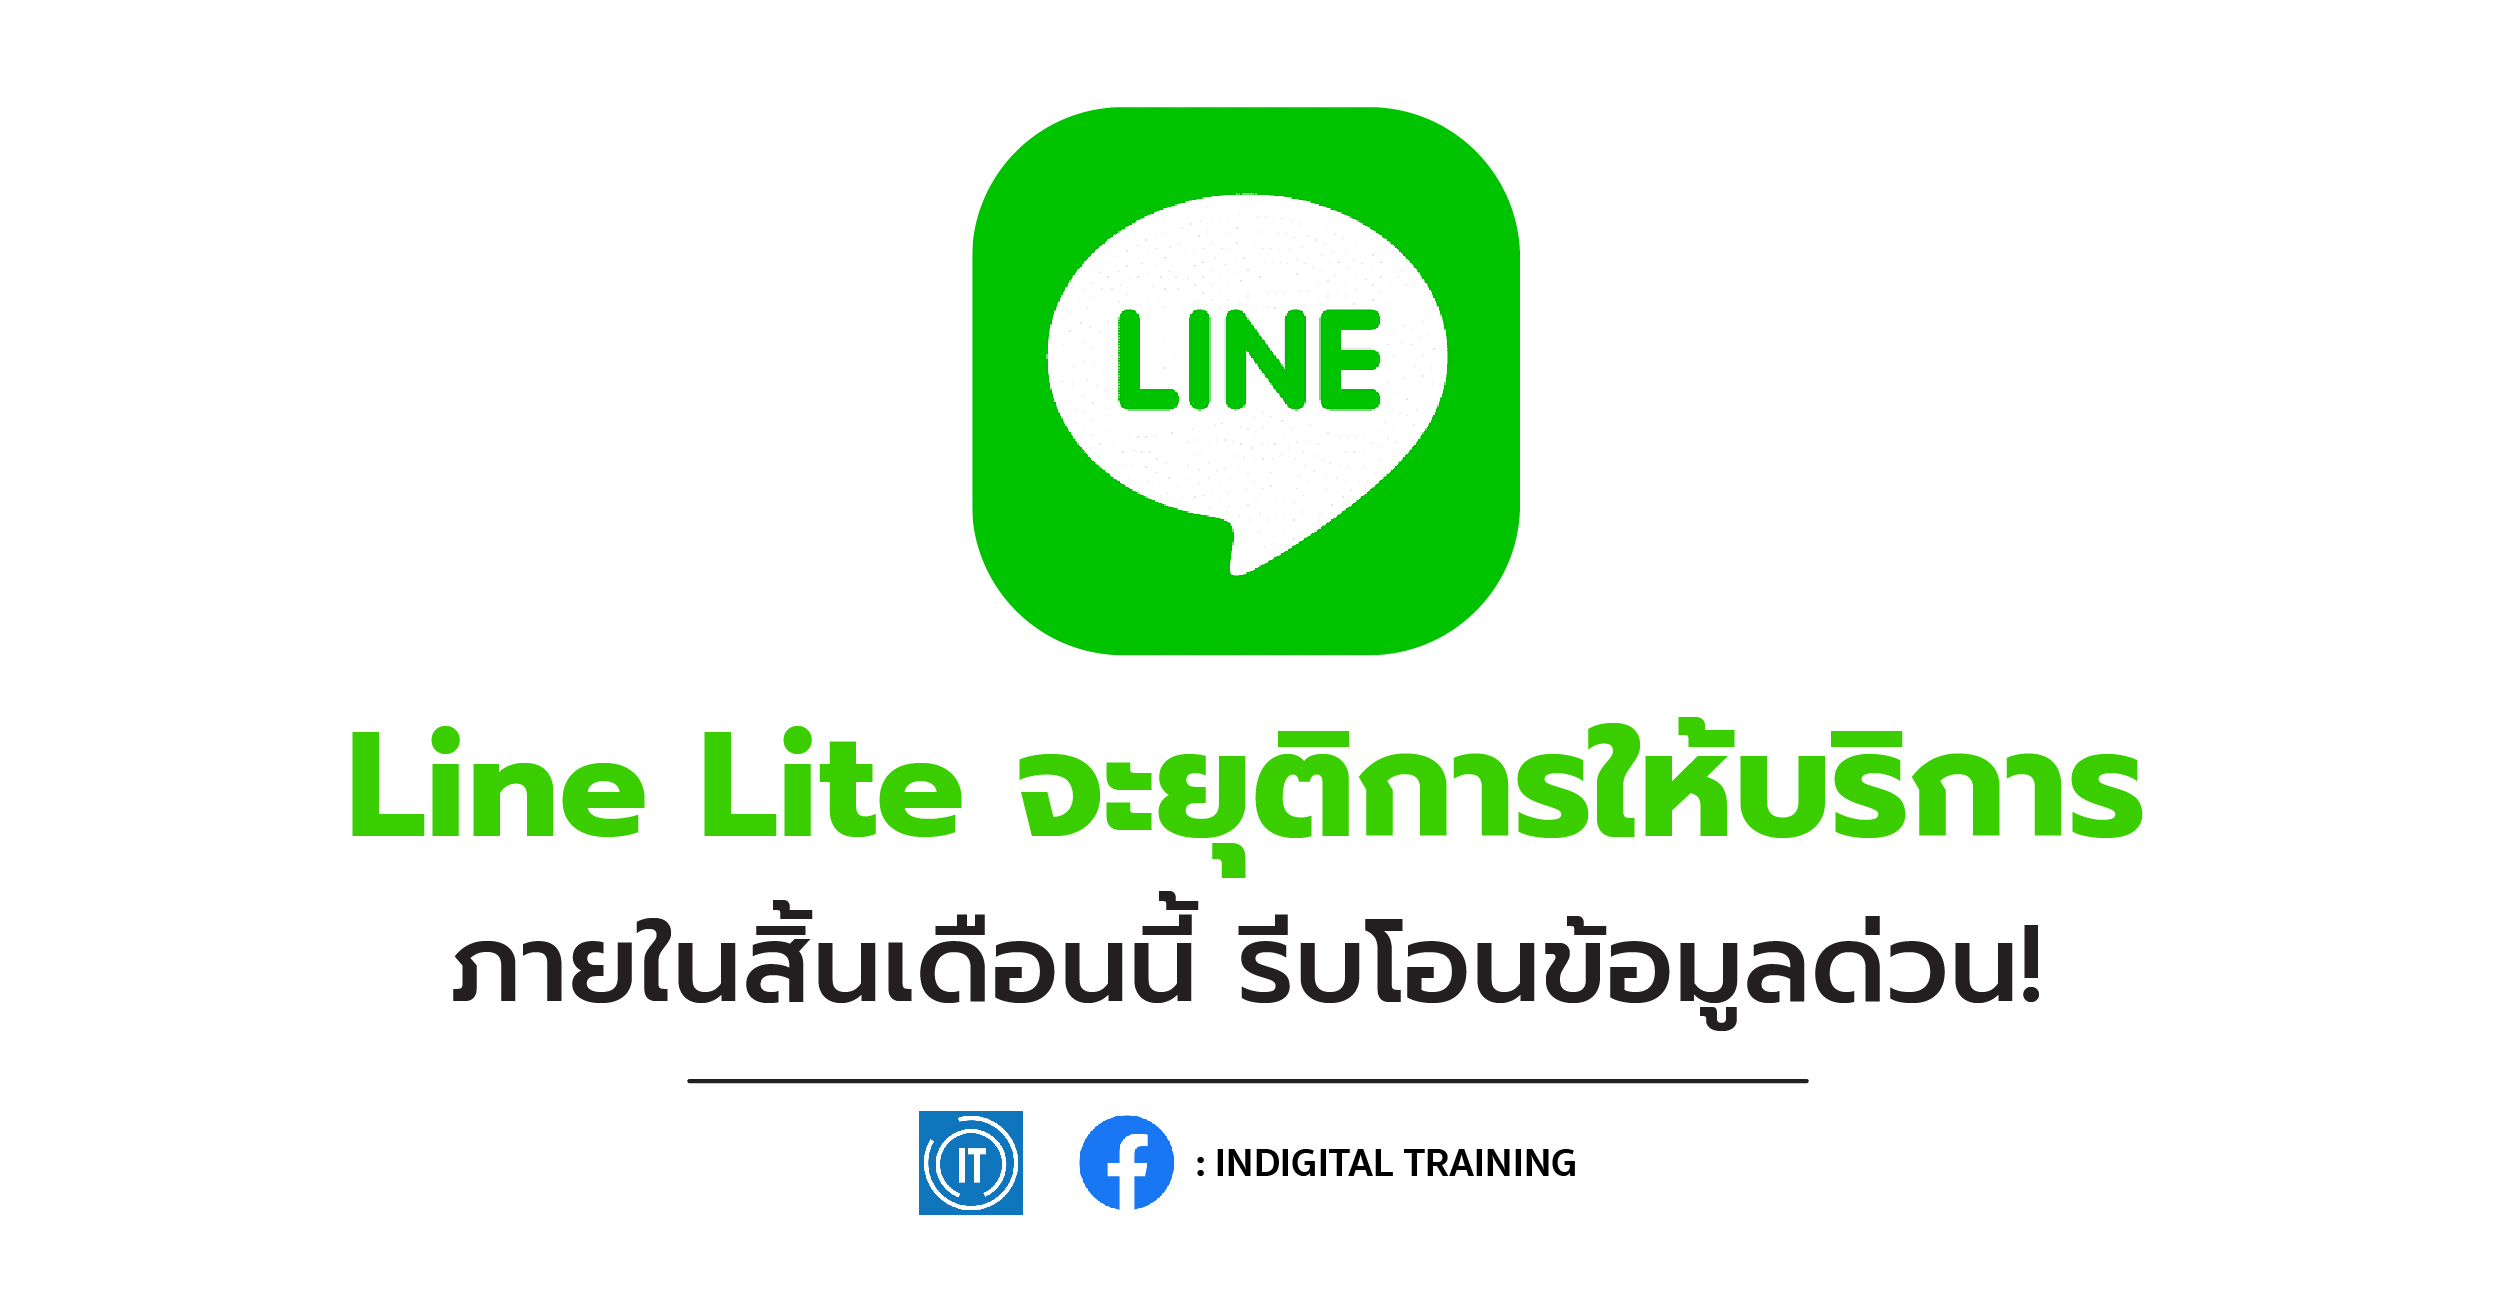 Line, Line Feature, Line Official Account, Line OA, Line Lite, Line Update, Line Lite จะยุติการให้บริการภายในสิ้นเดือนนี้ รีบโอนข้อมูลด่วน!